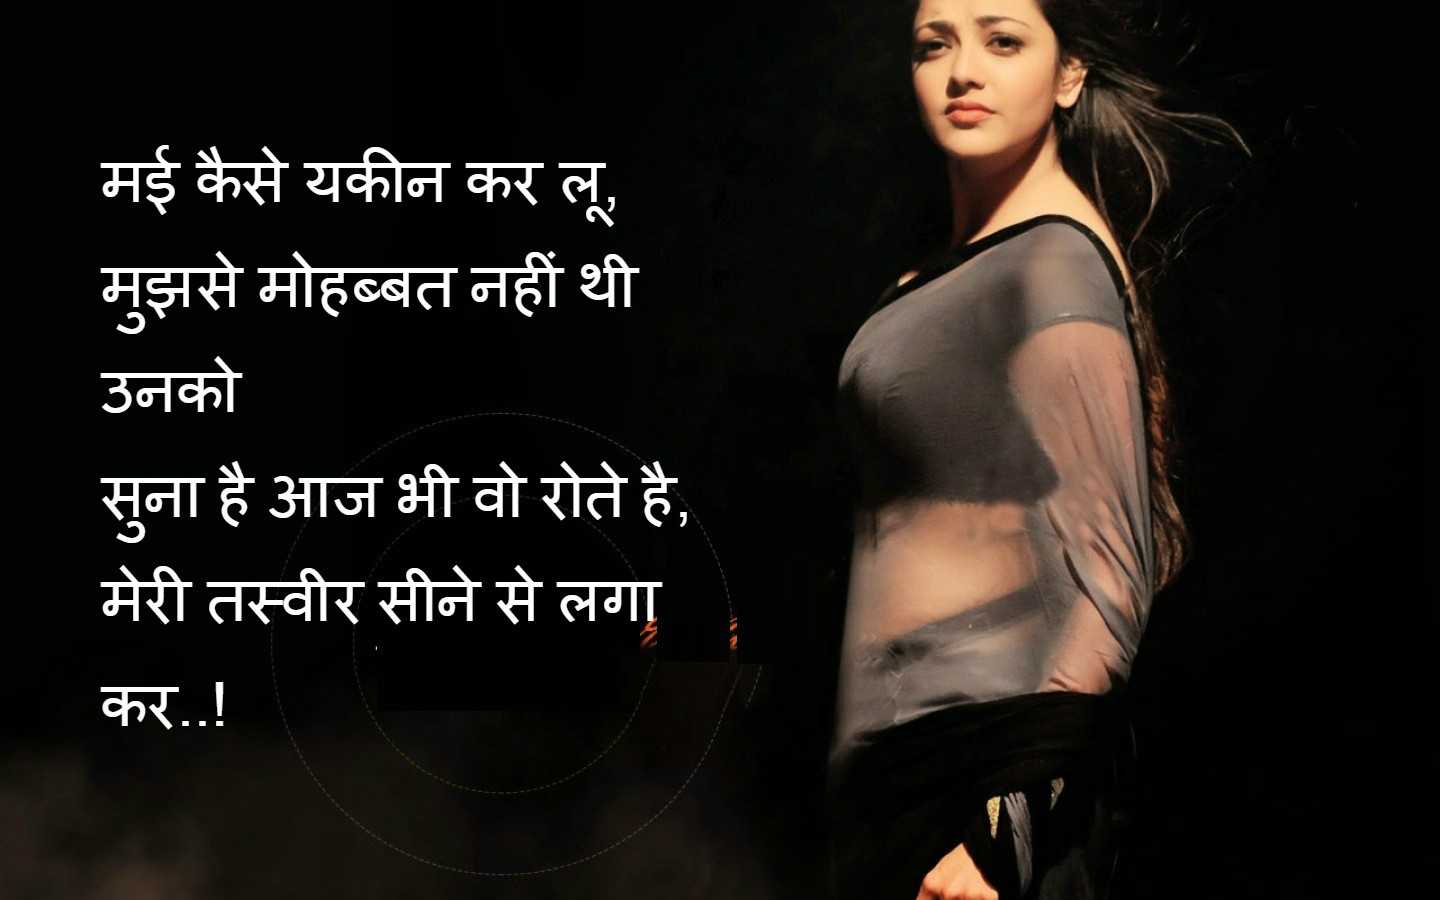 Best Love Shayari SMS and Quotes in Hindi hindi love shayari sms for girlfriend hindi love shayari sms 140 character hindi love shayari sms messages sad